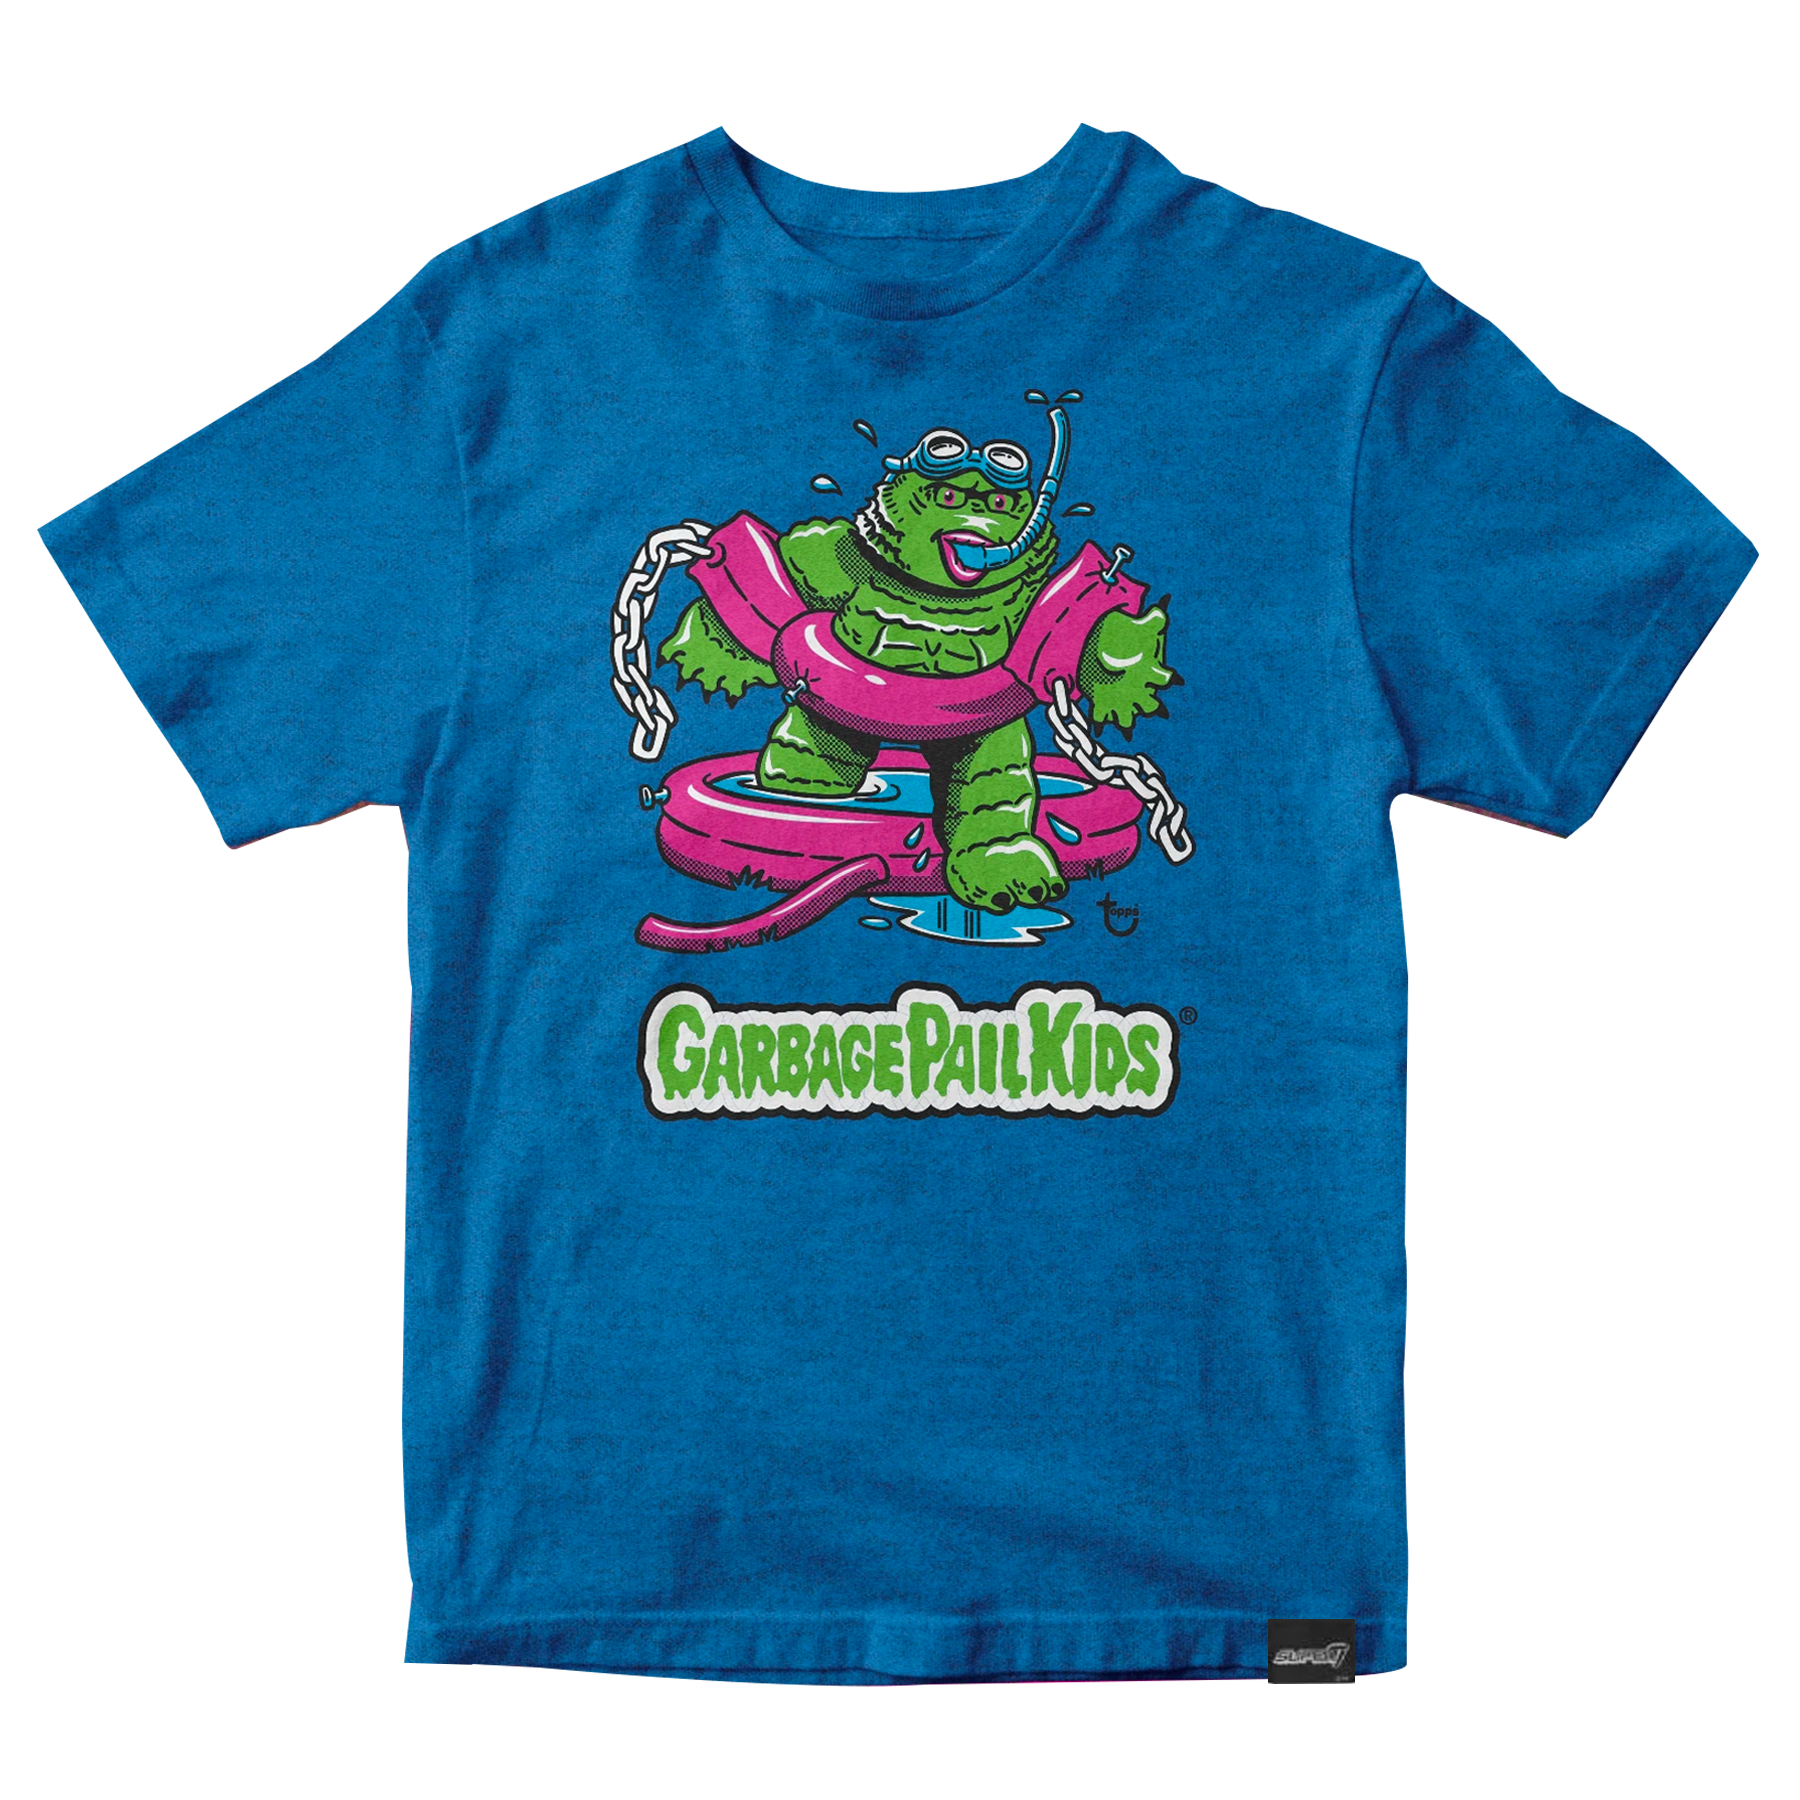 Universal Monsters  x Garbage Pail Kids T-shirt - Creature